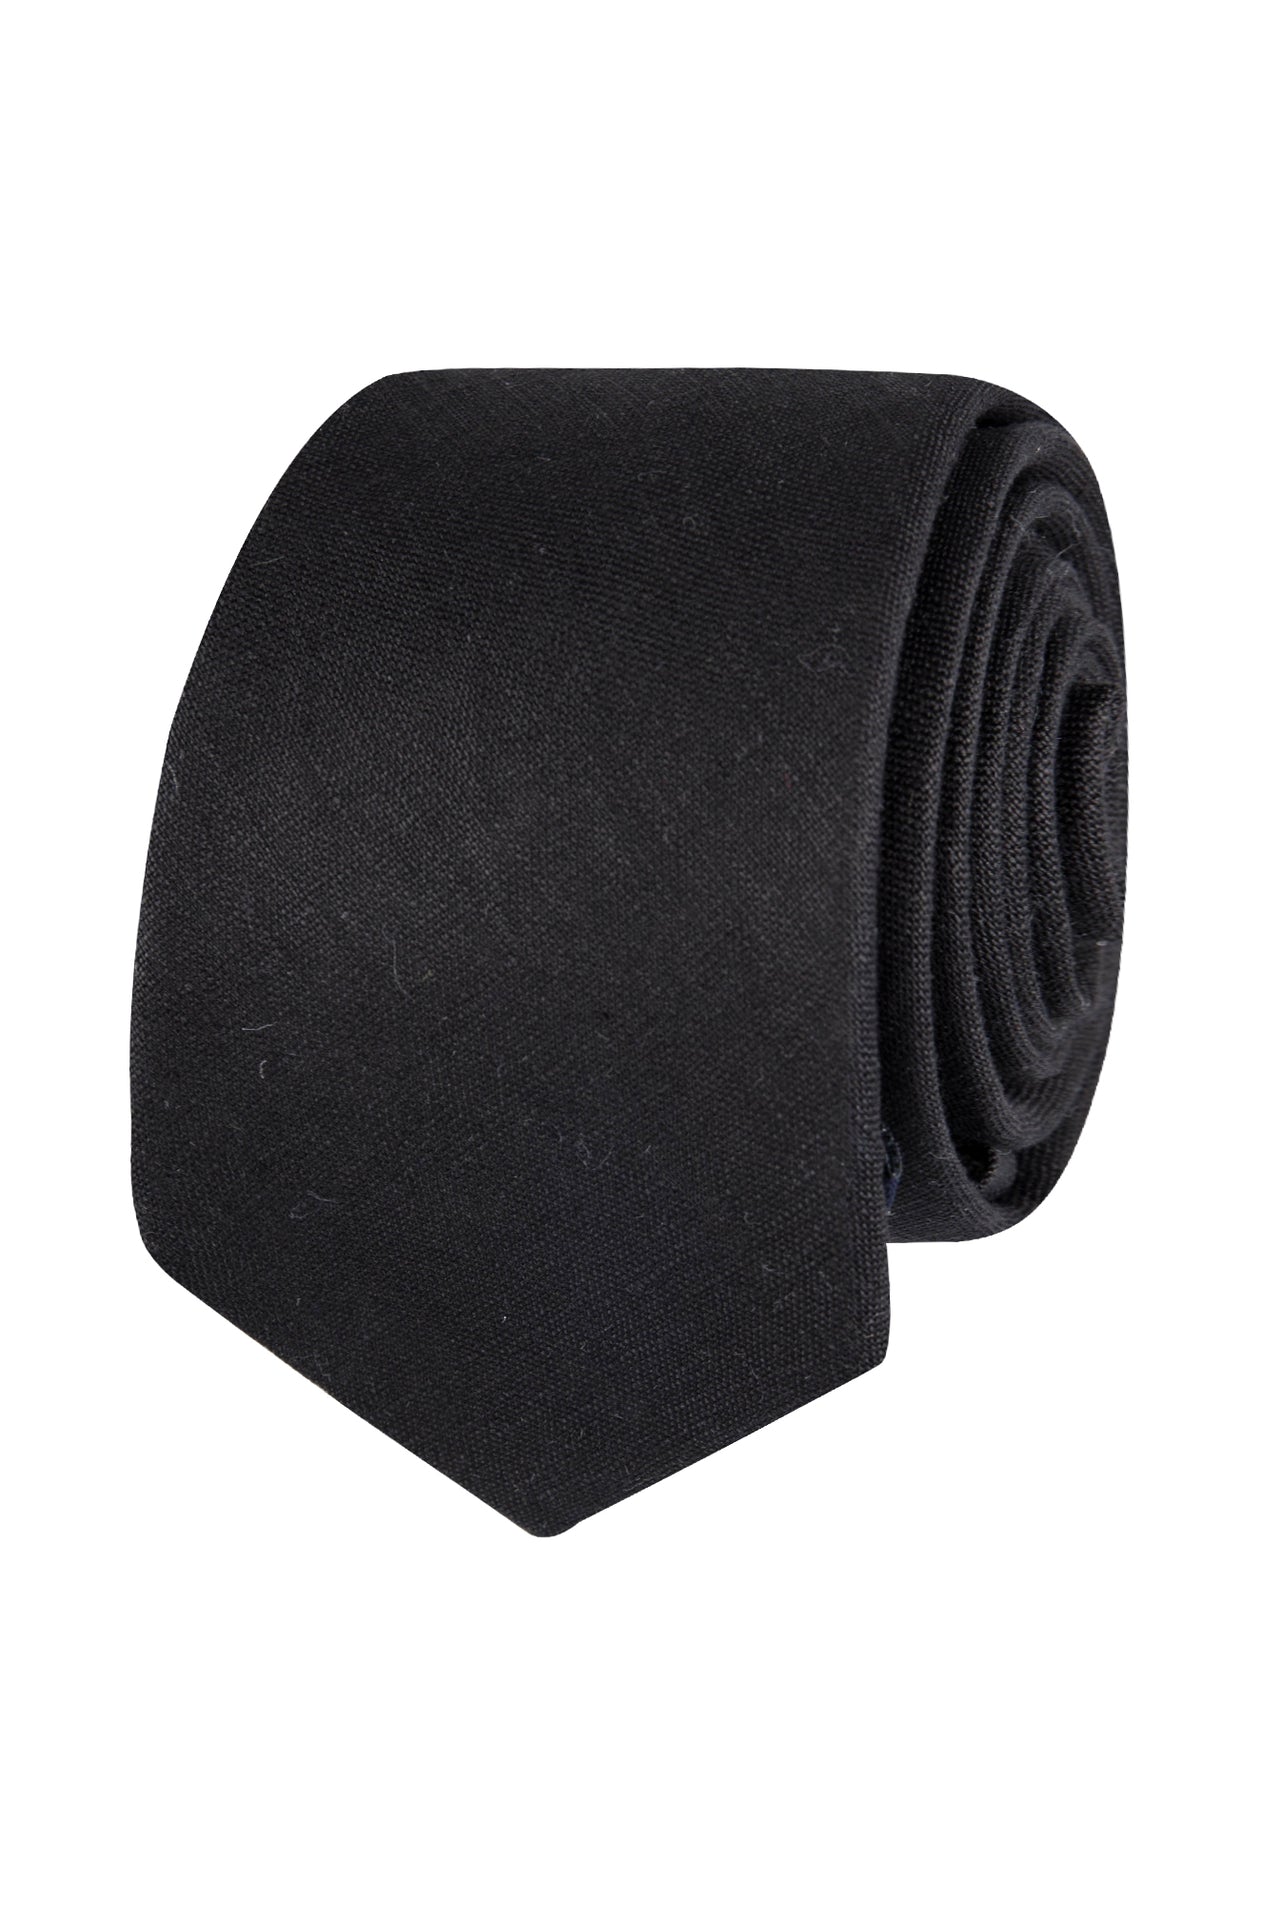 ABELARD Plain Linen Tie BLACK